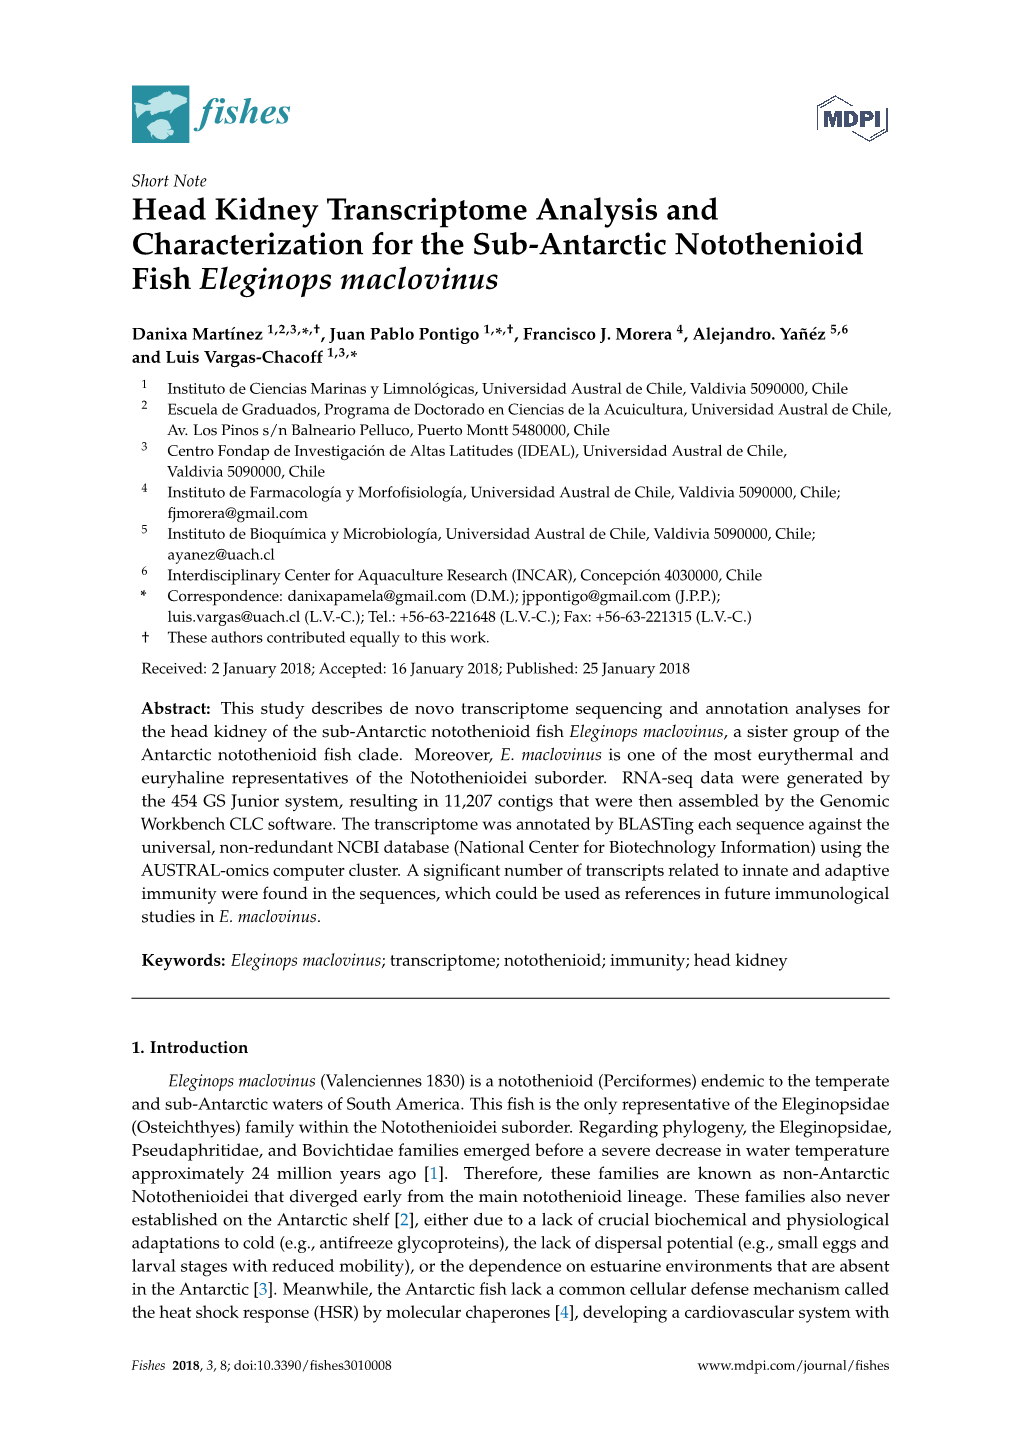 Head Kidney Transcriptome Analysis and Characterization for the Sub-Antarctic Notothenioid Fish Eleginops Maclovinus